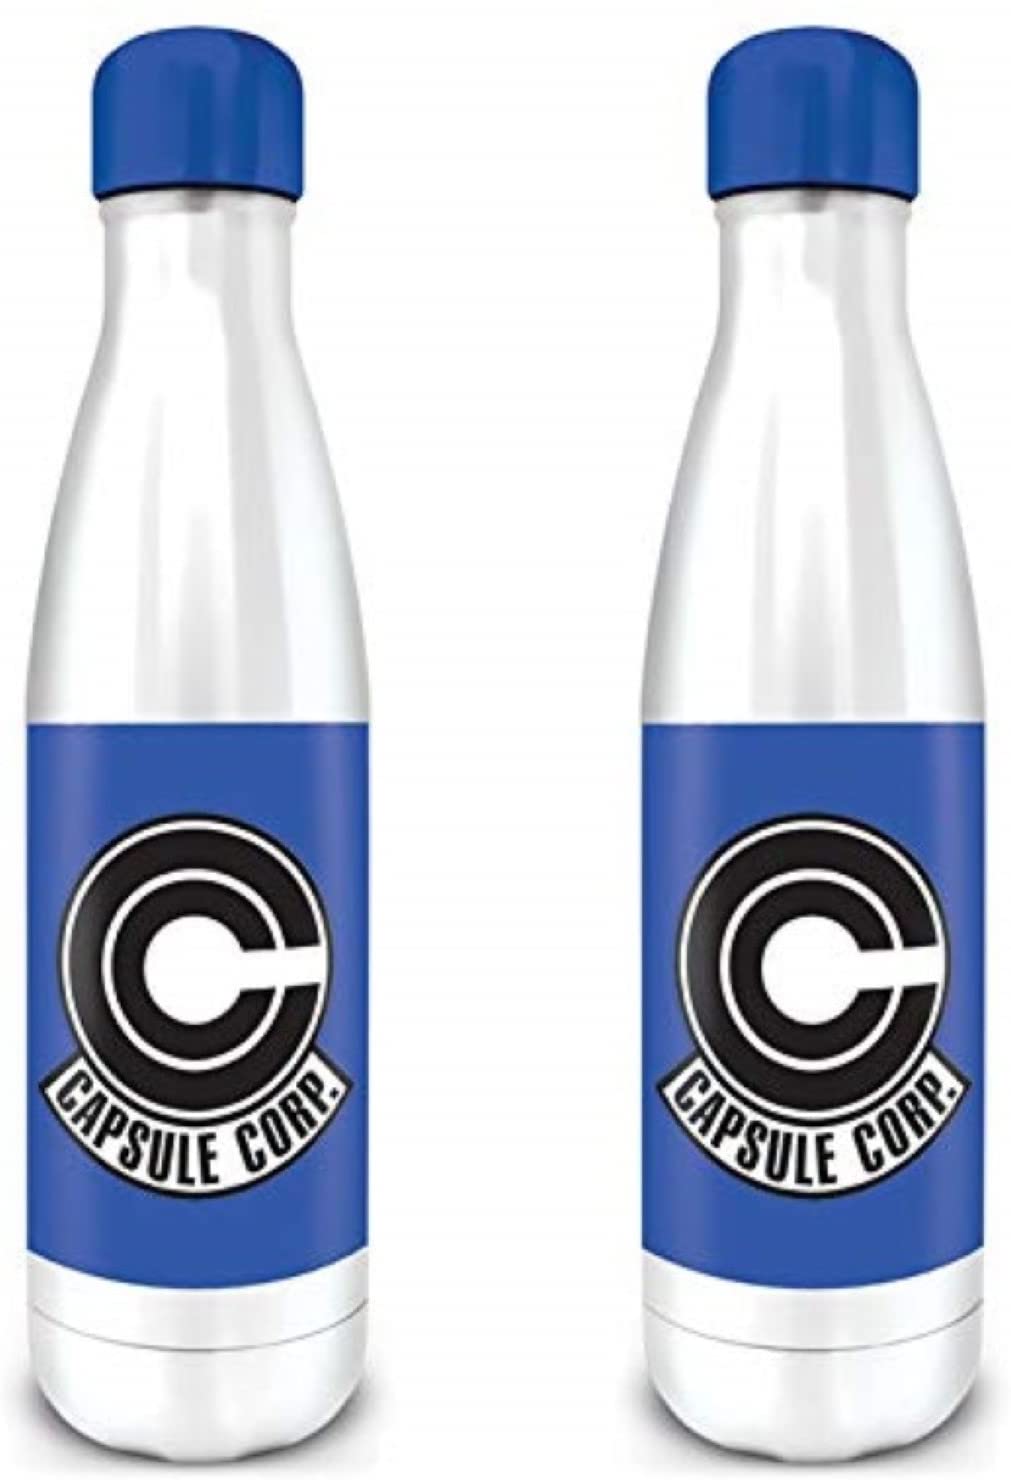 Dragon Ball Z (Capsule Corp) Metal Drinks Bottle